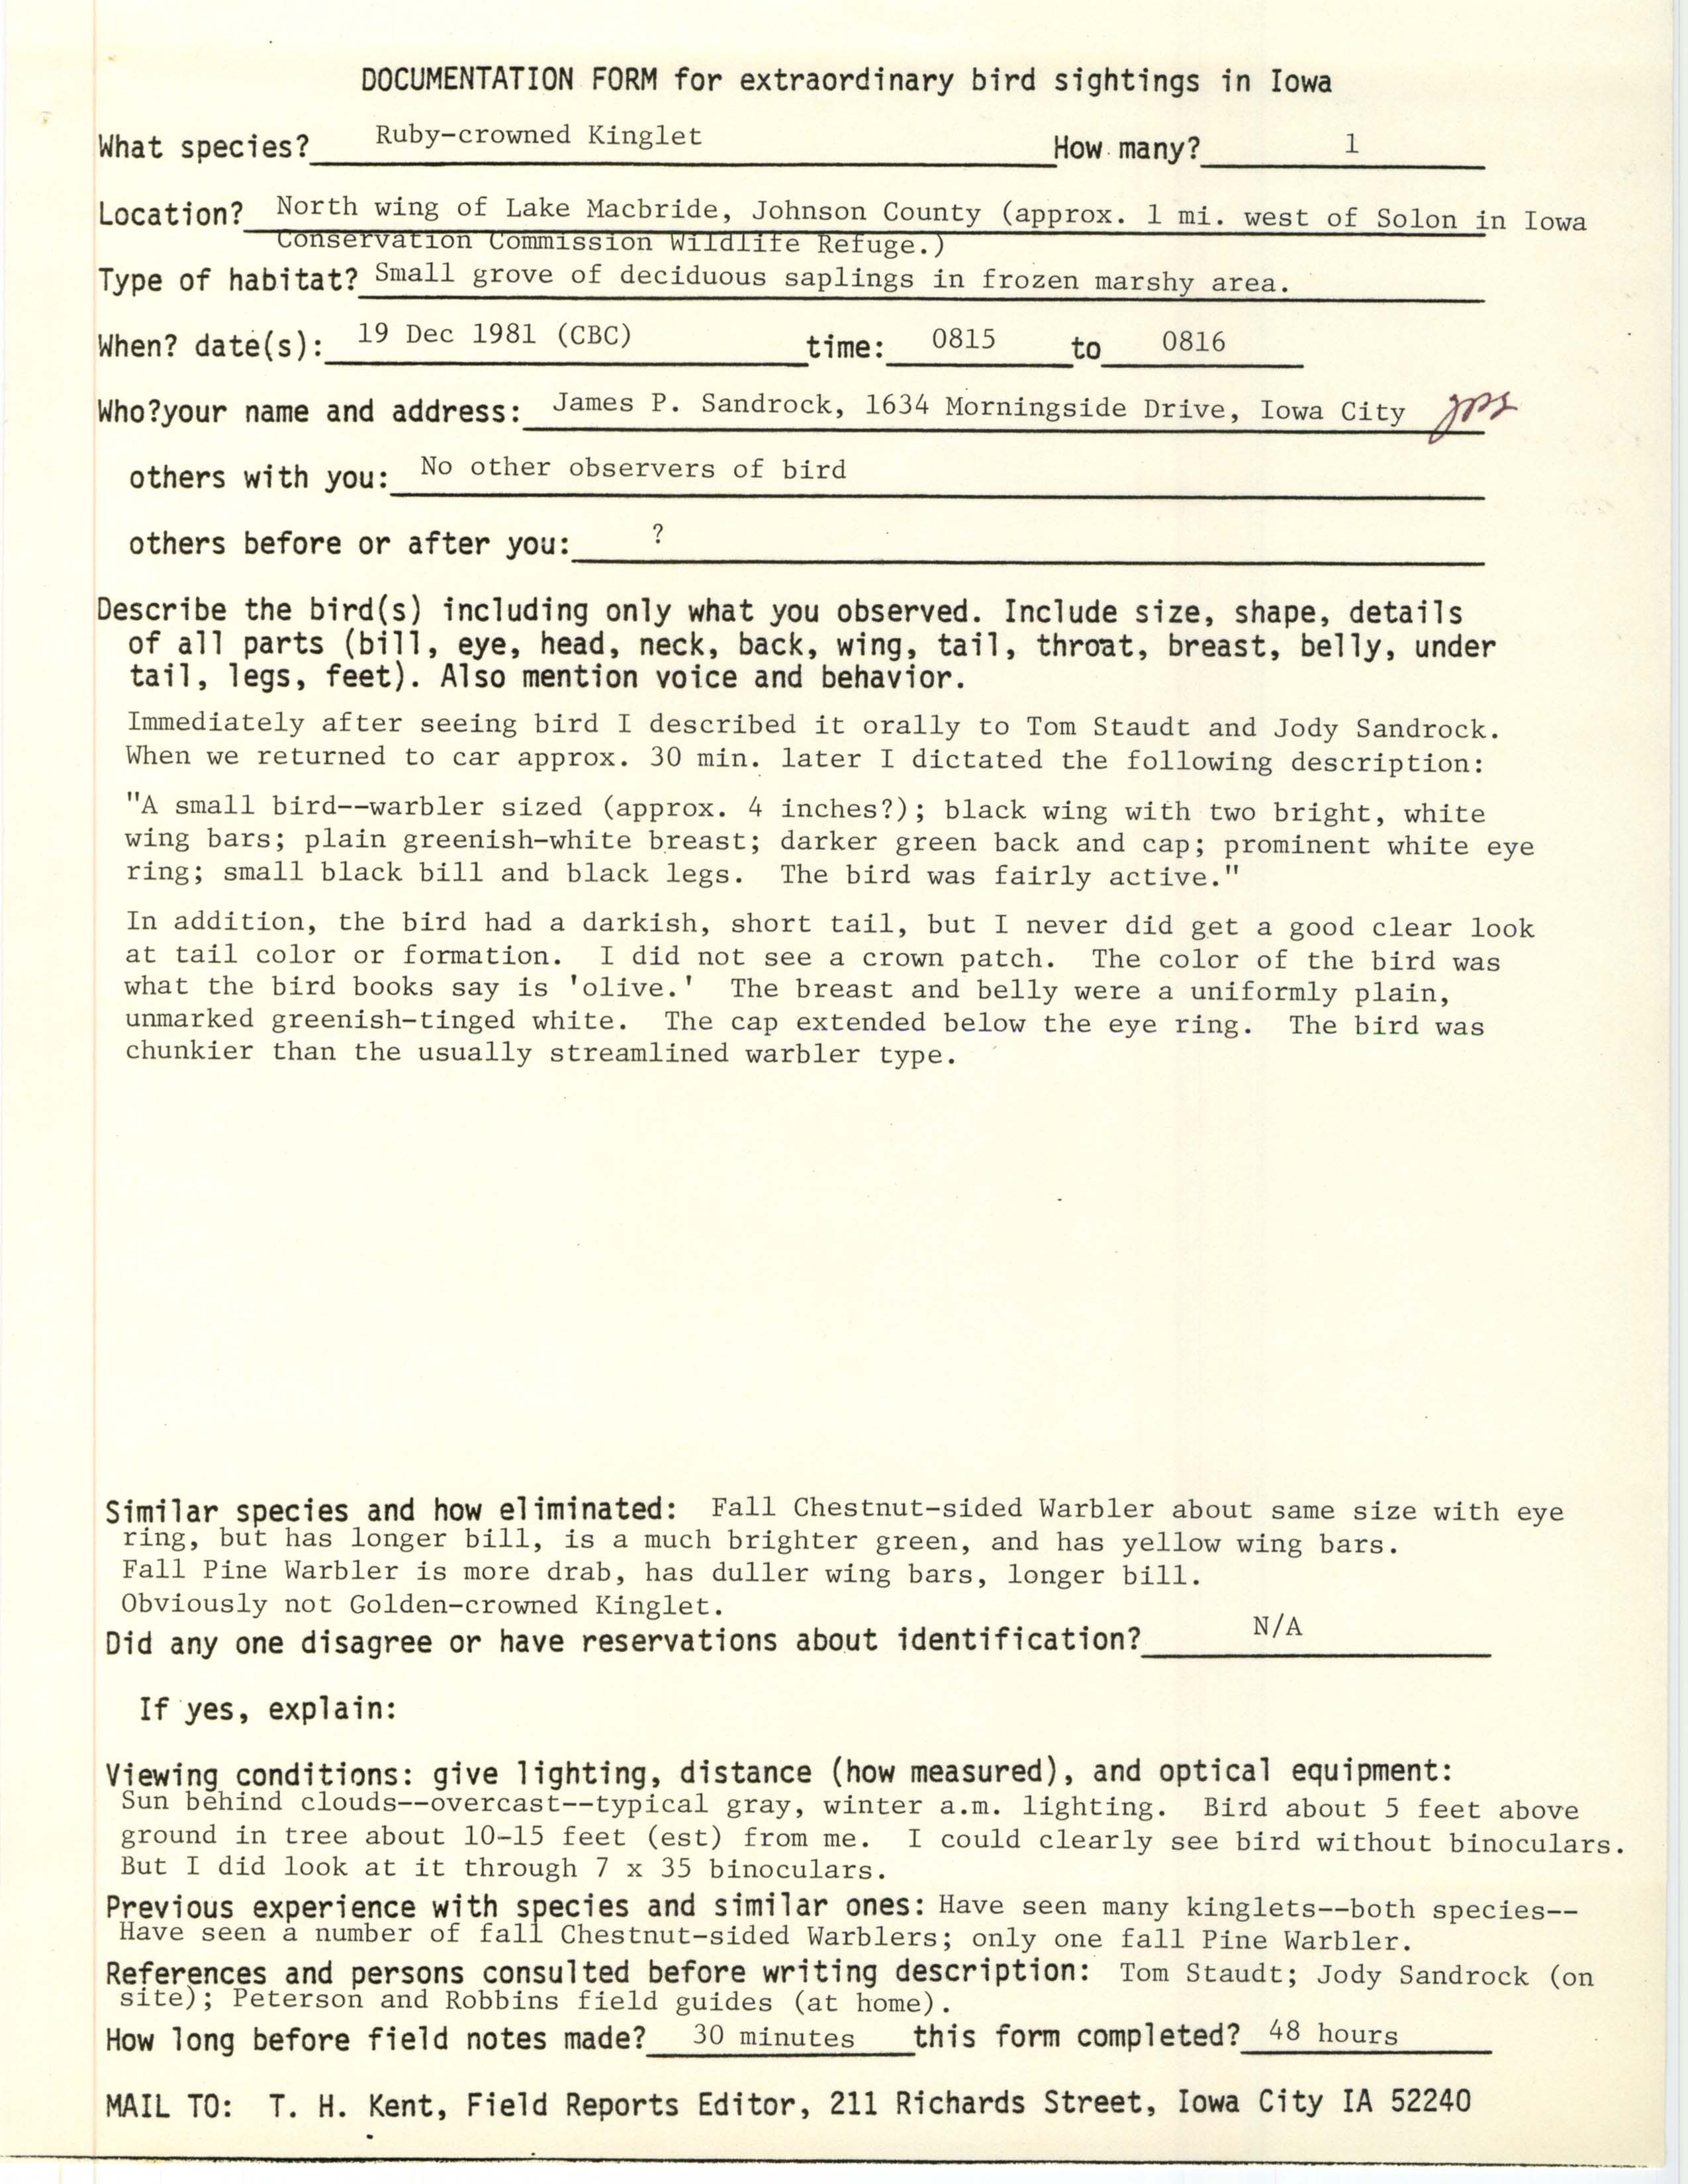 Rare bird documentation form for Ruby-crowned Kinglet at Lake MacBride, 1981